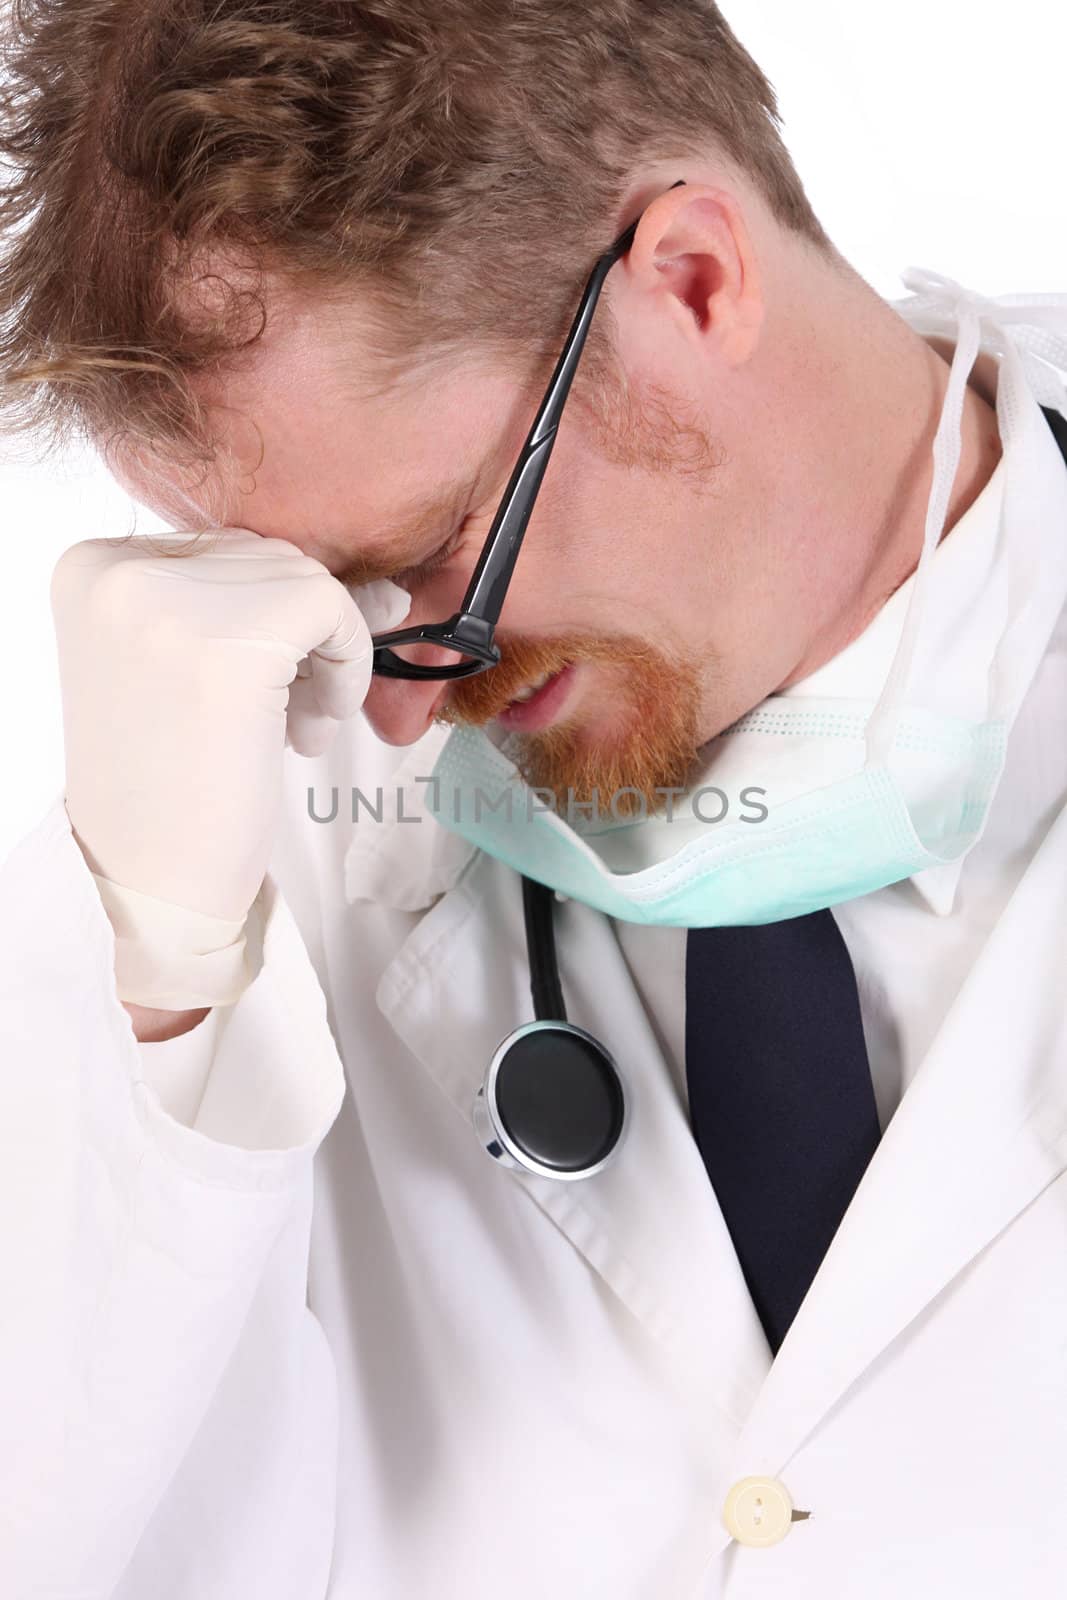 depressed doctor on white background